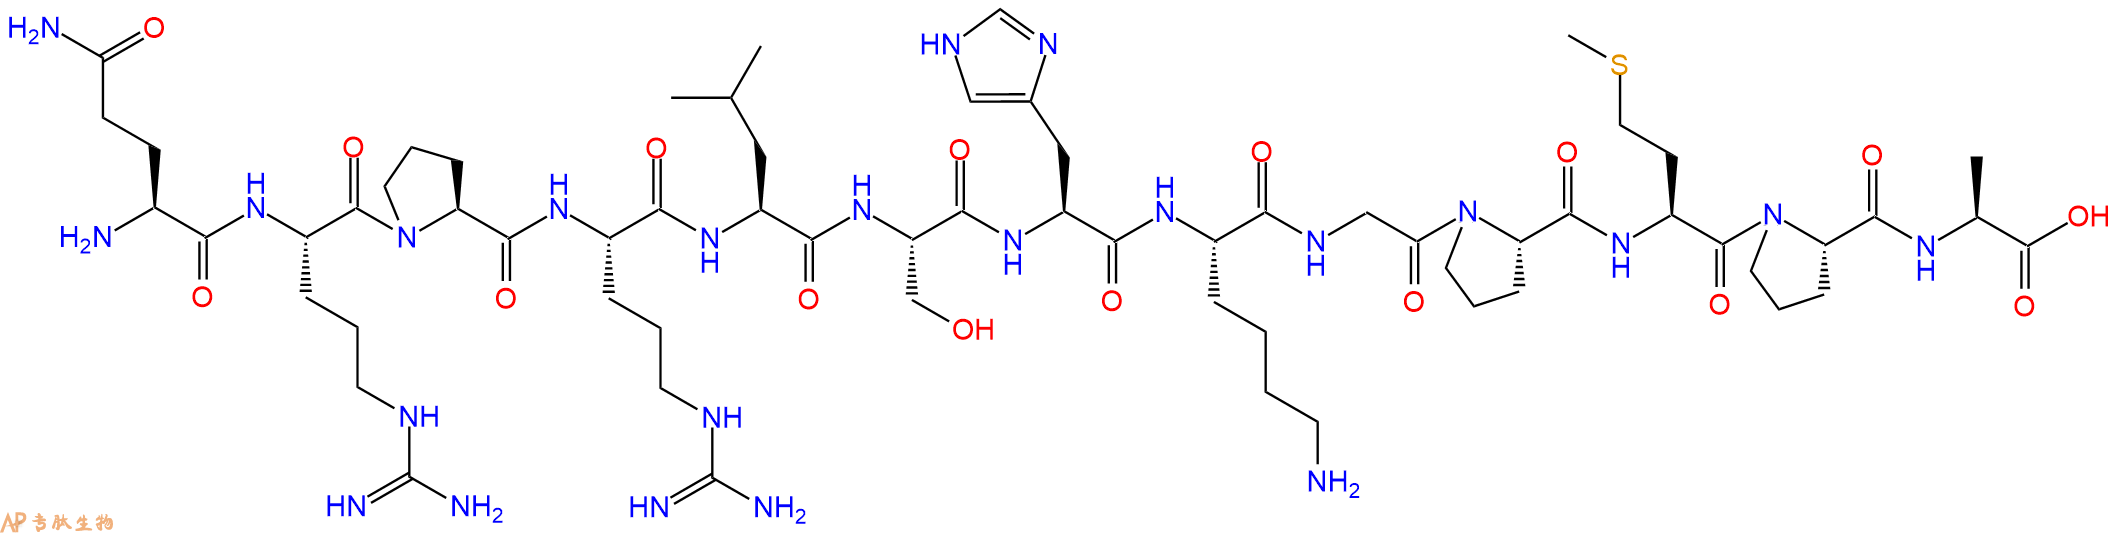 多肽生物产品(Ala¹³)-Apelin-13 (human, bovine, mouse, rat)568565-11-7